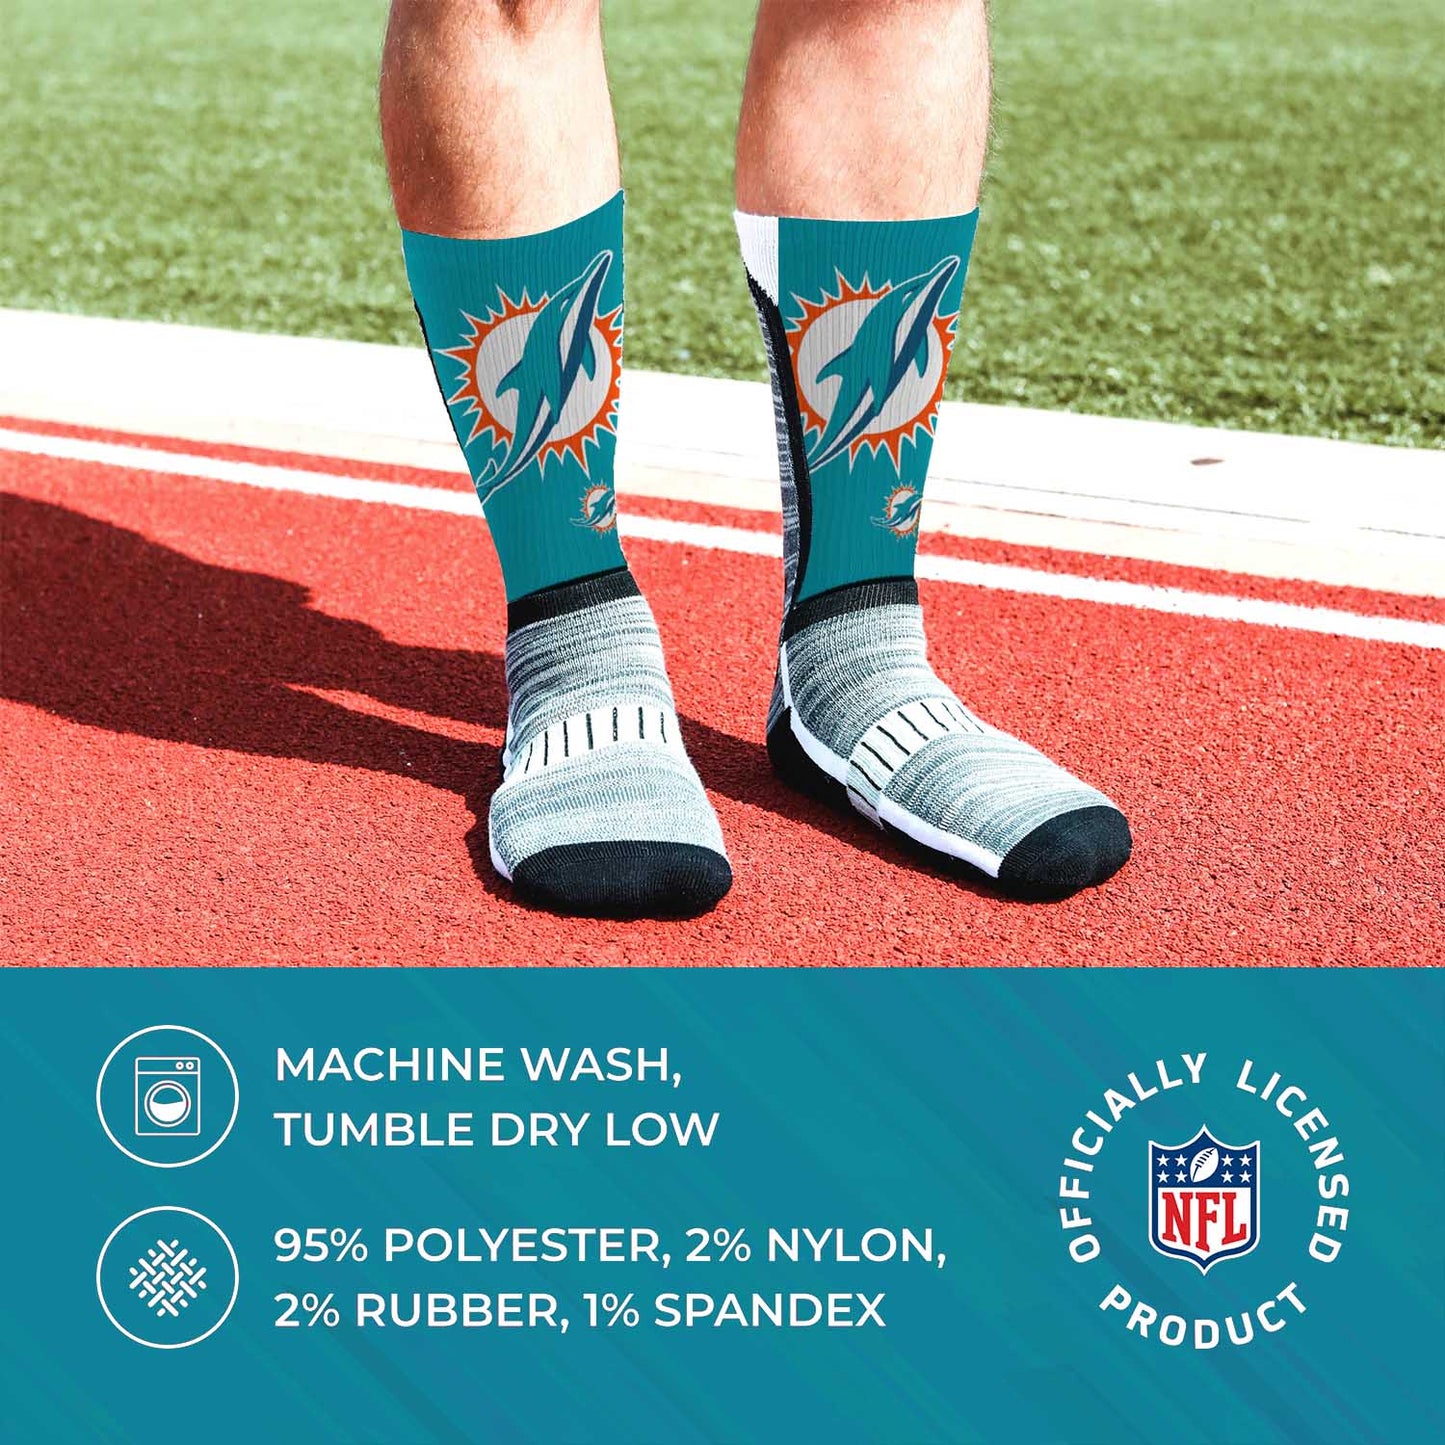 Miami Dolphins NFL Adult Curve Socks - Teal